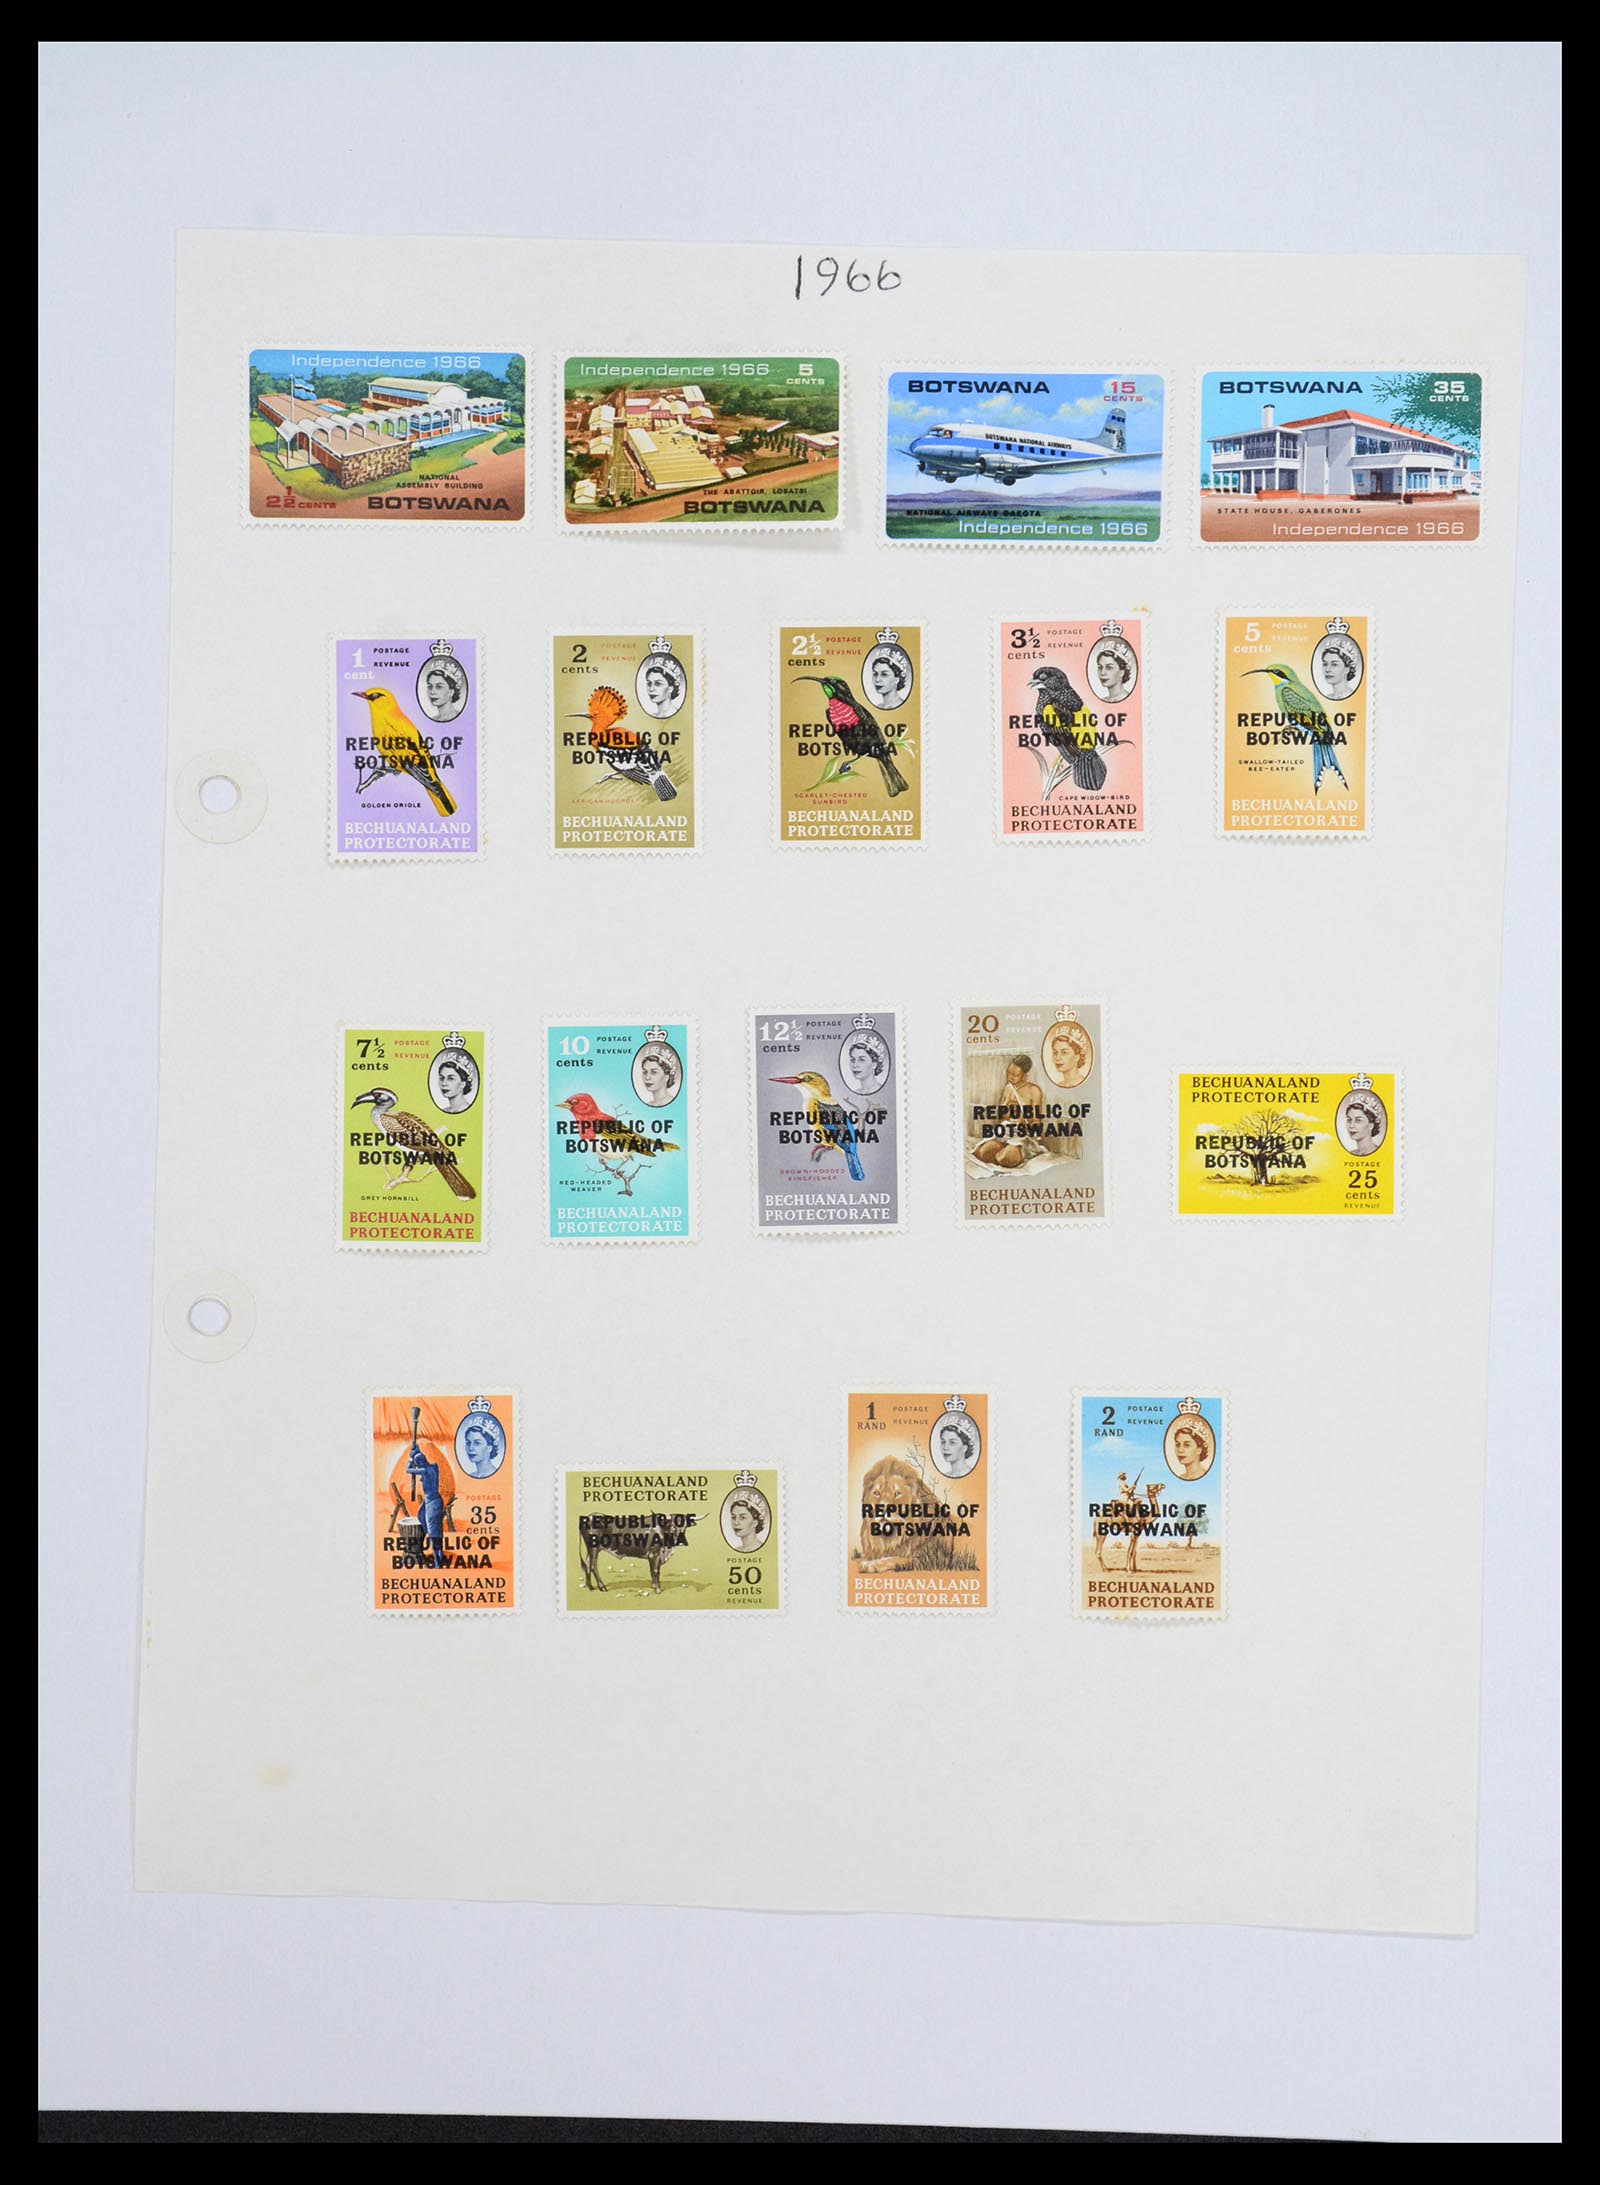 36643 001 - Stamp collection 36643 Botswana 1966-2002.